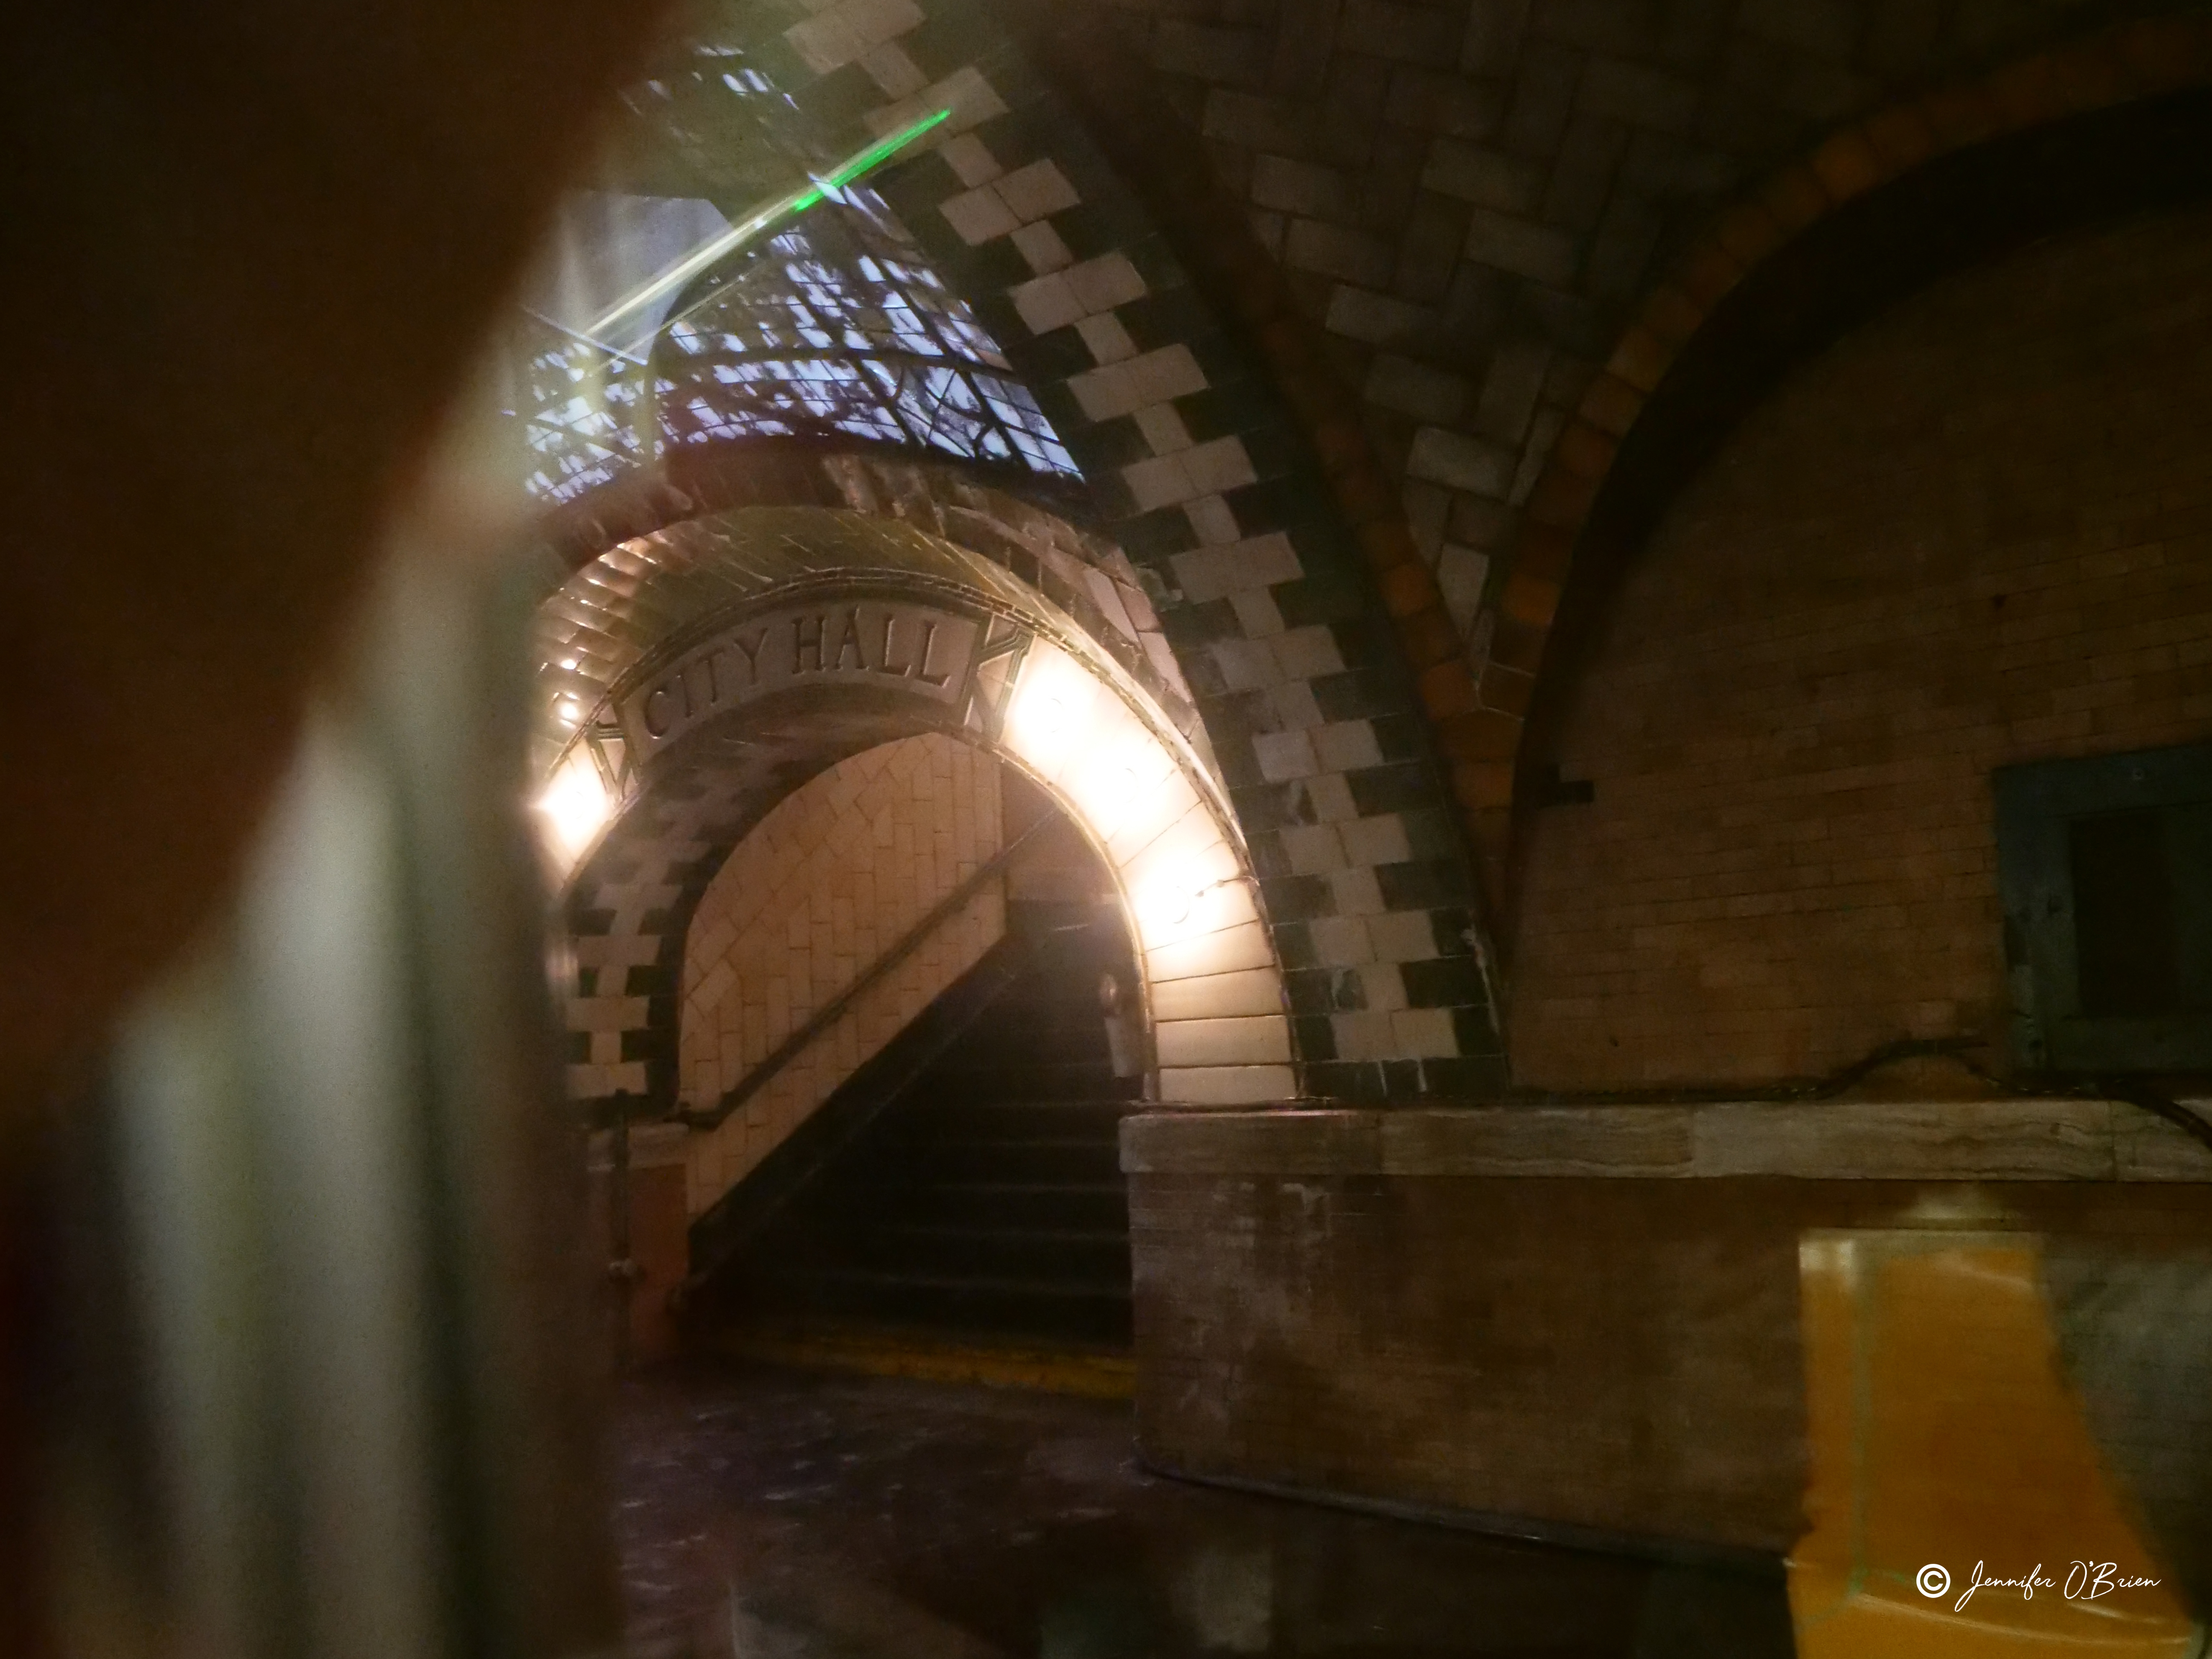 free tour through windows NYC Abandoned City Hall Subway Station Photo Challenge